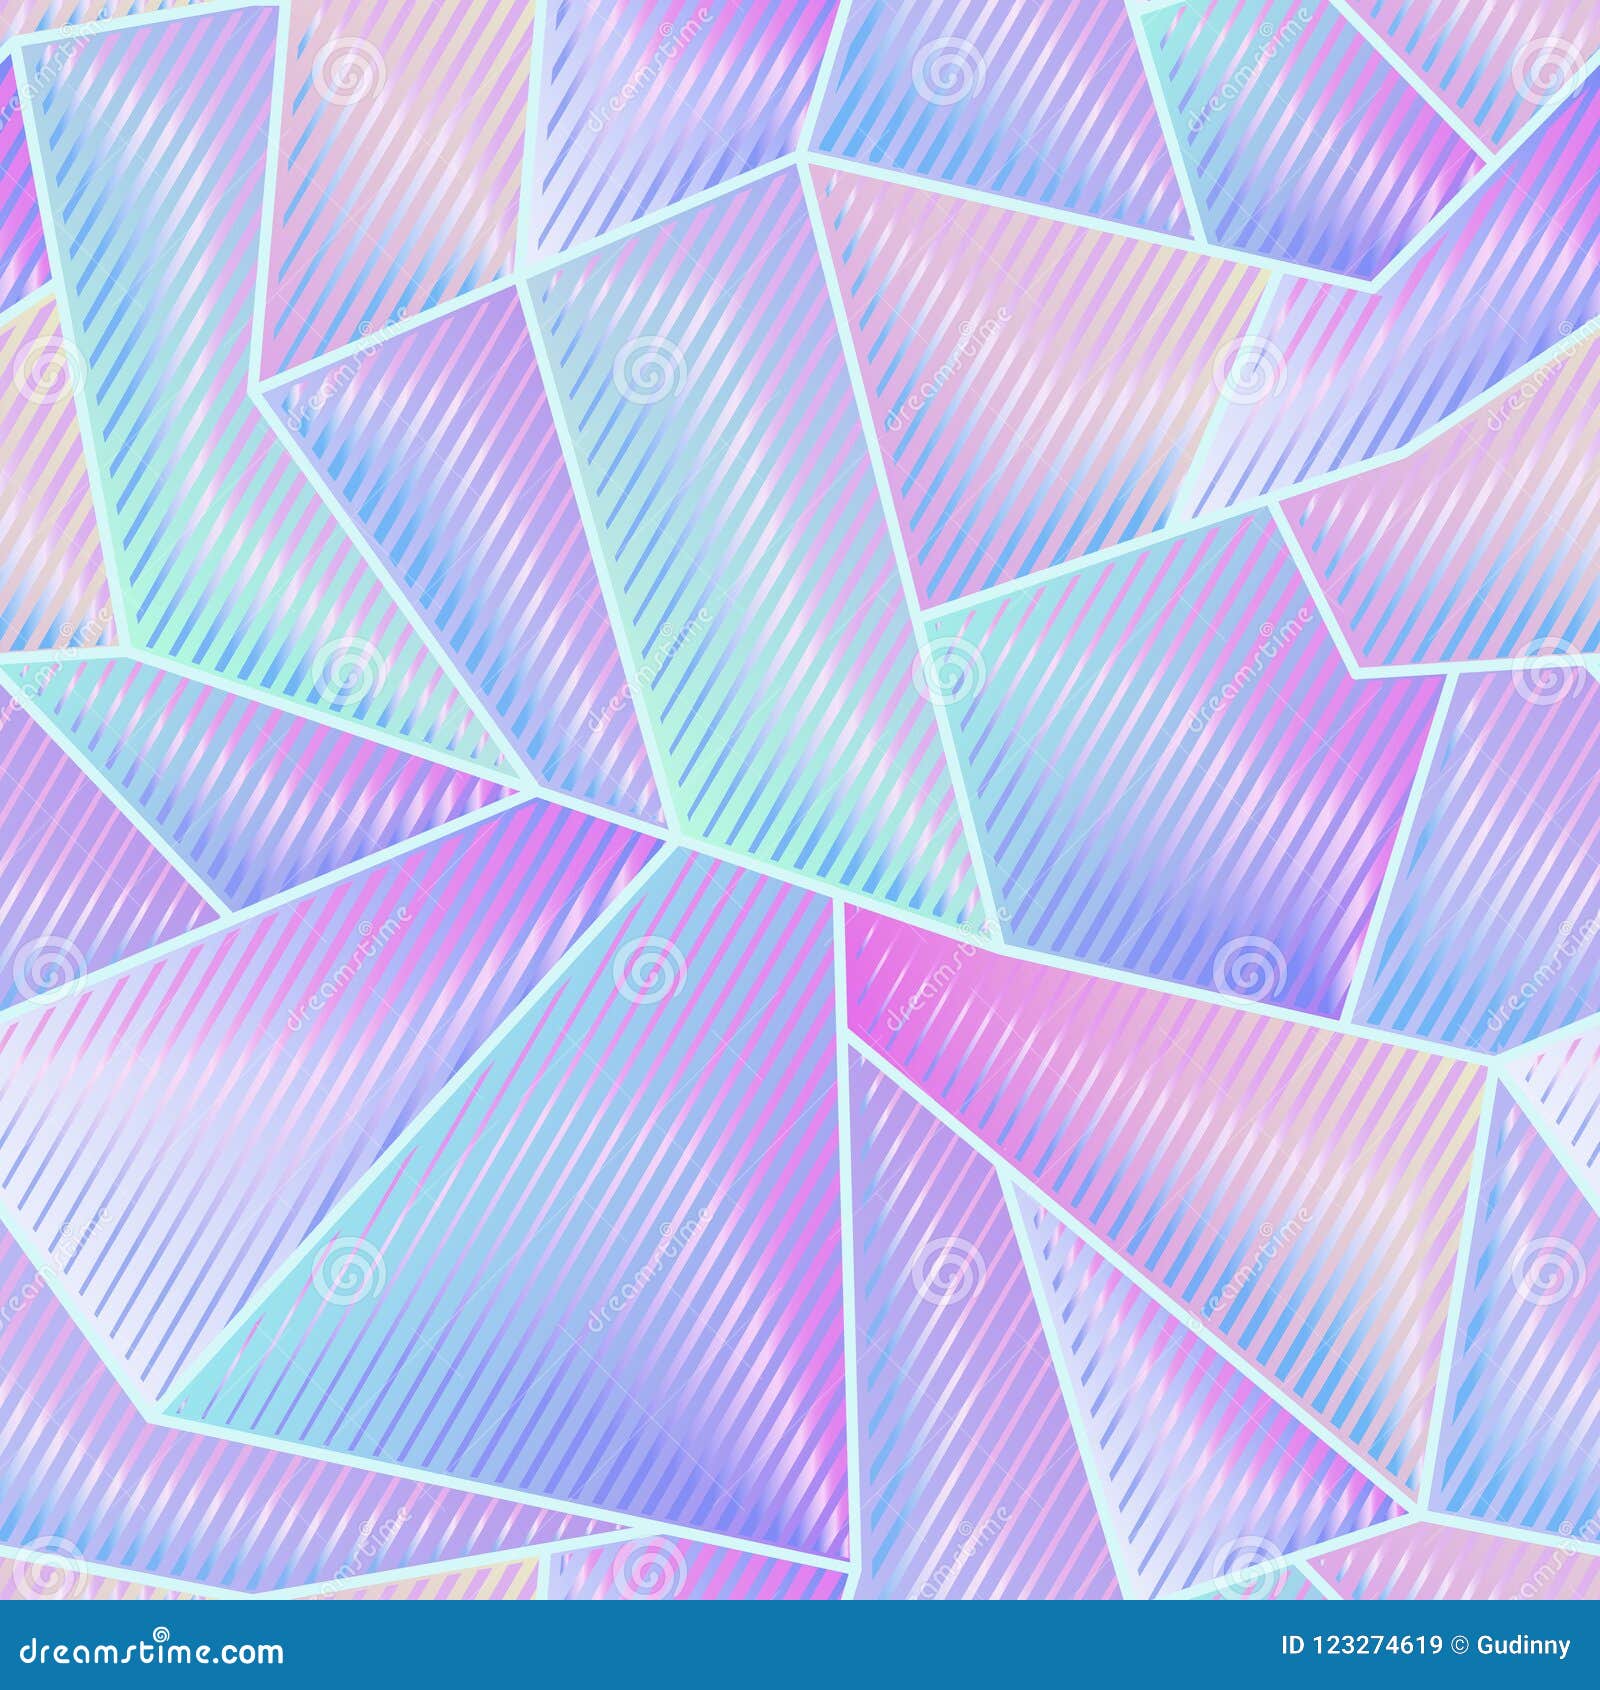 abstract hologram geometric pattern